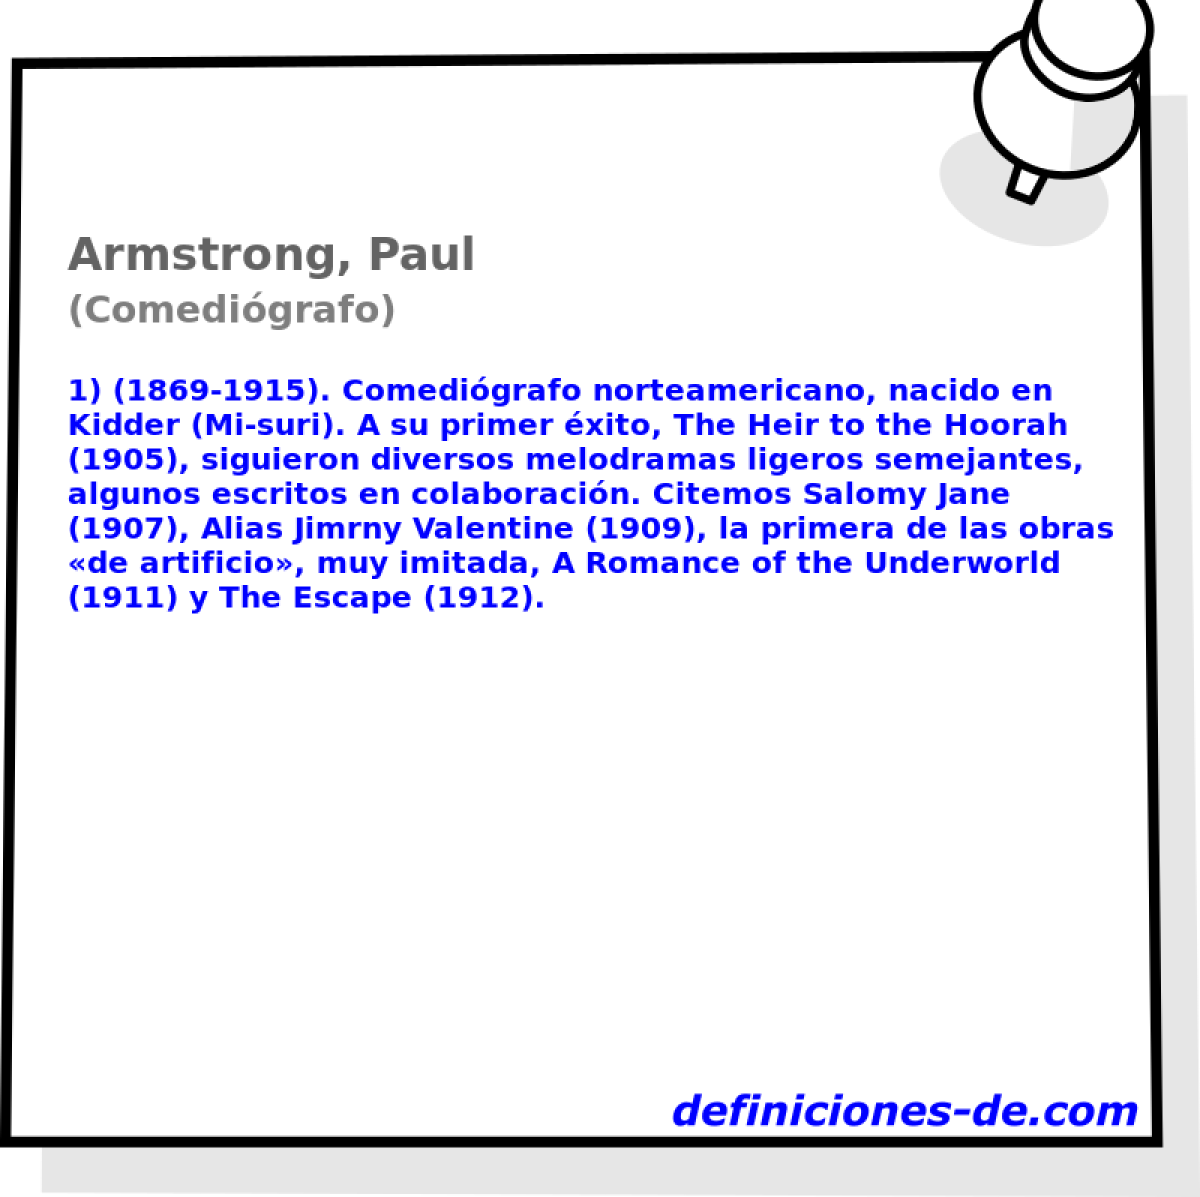 Armstrong, Paul (Comedigrafo)